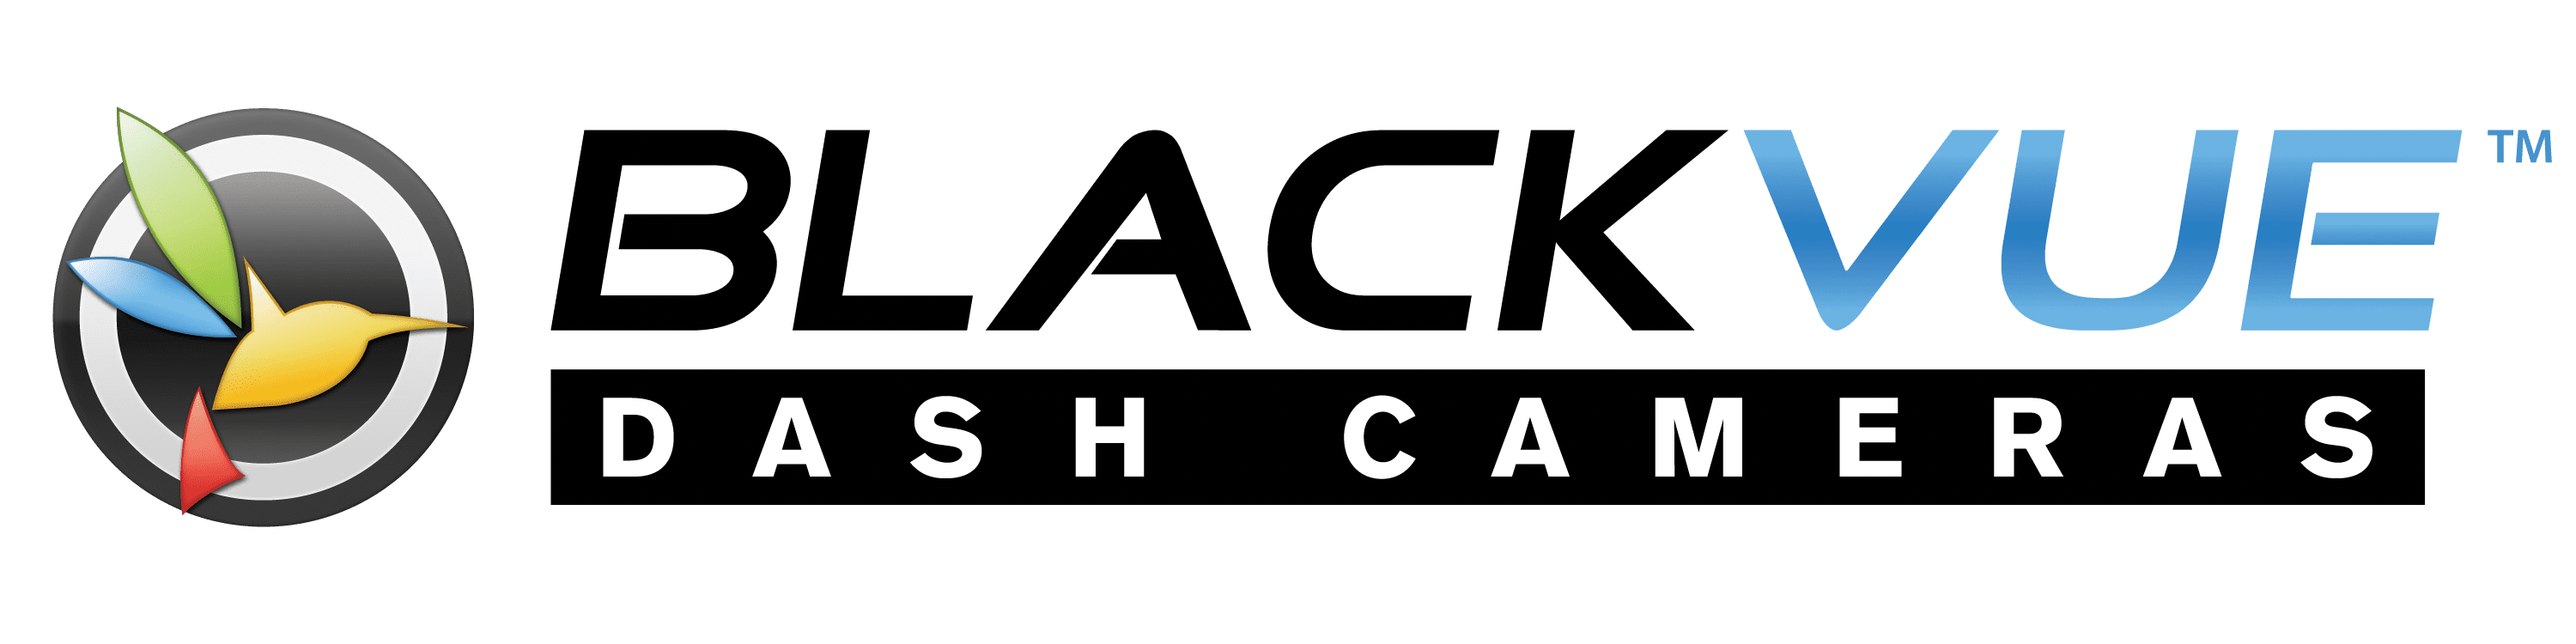 BlackVue Dash Camera Logo